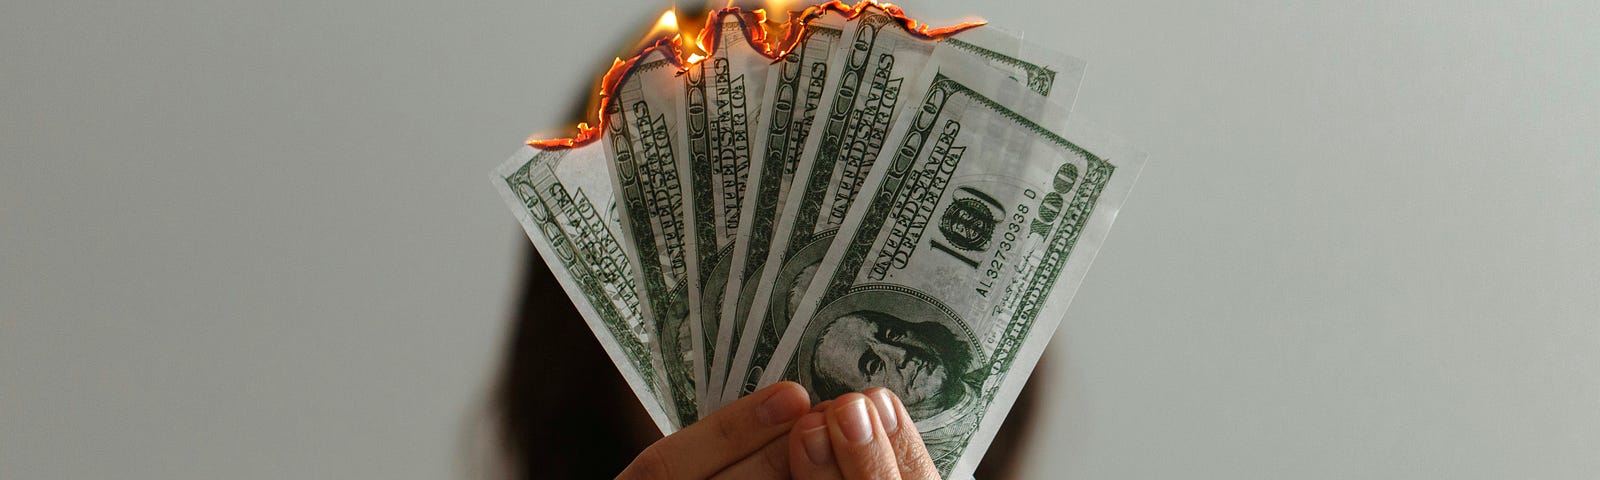 A woman burning money